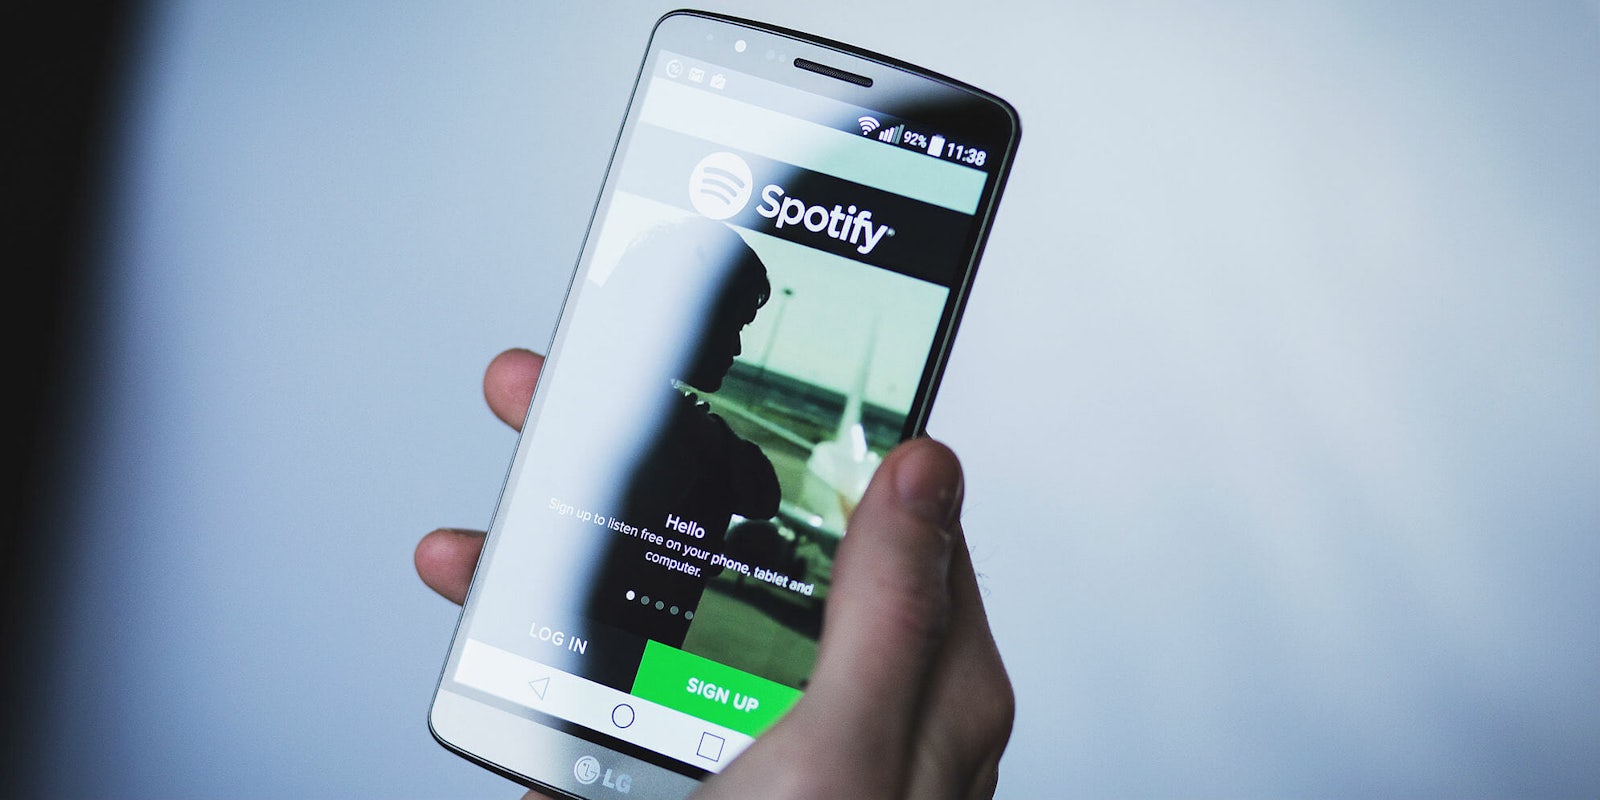 spotify music streaming app